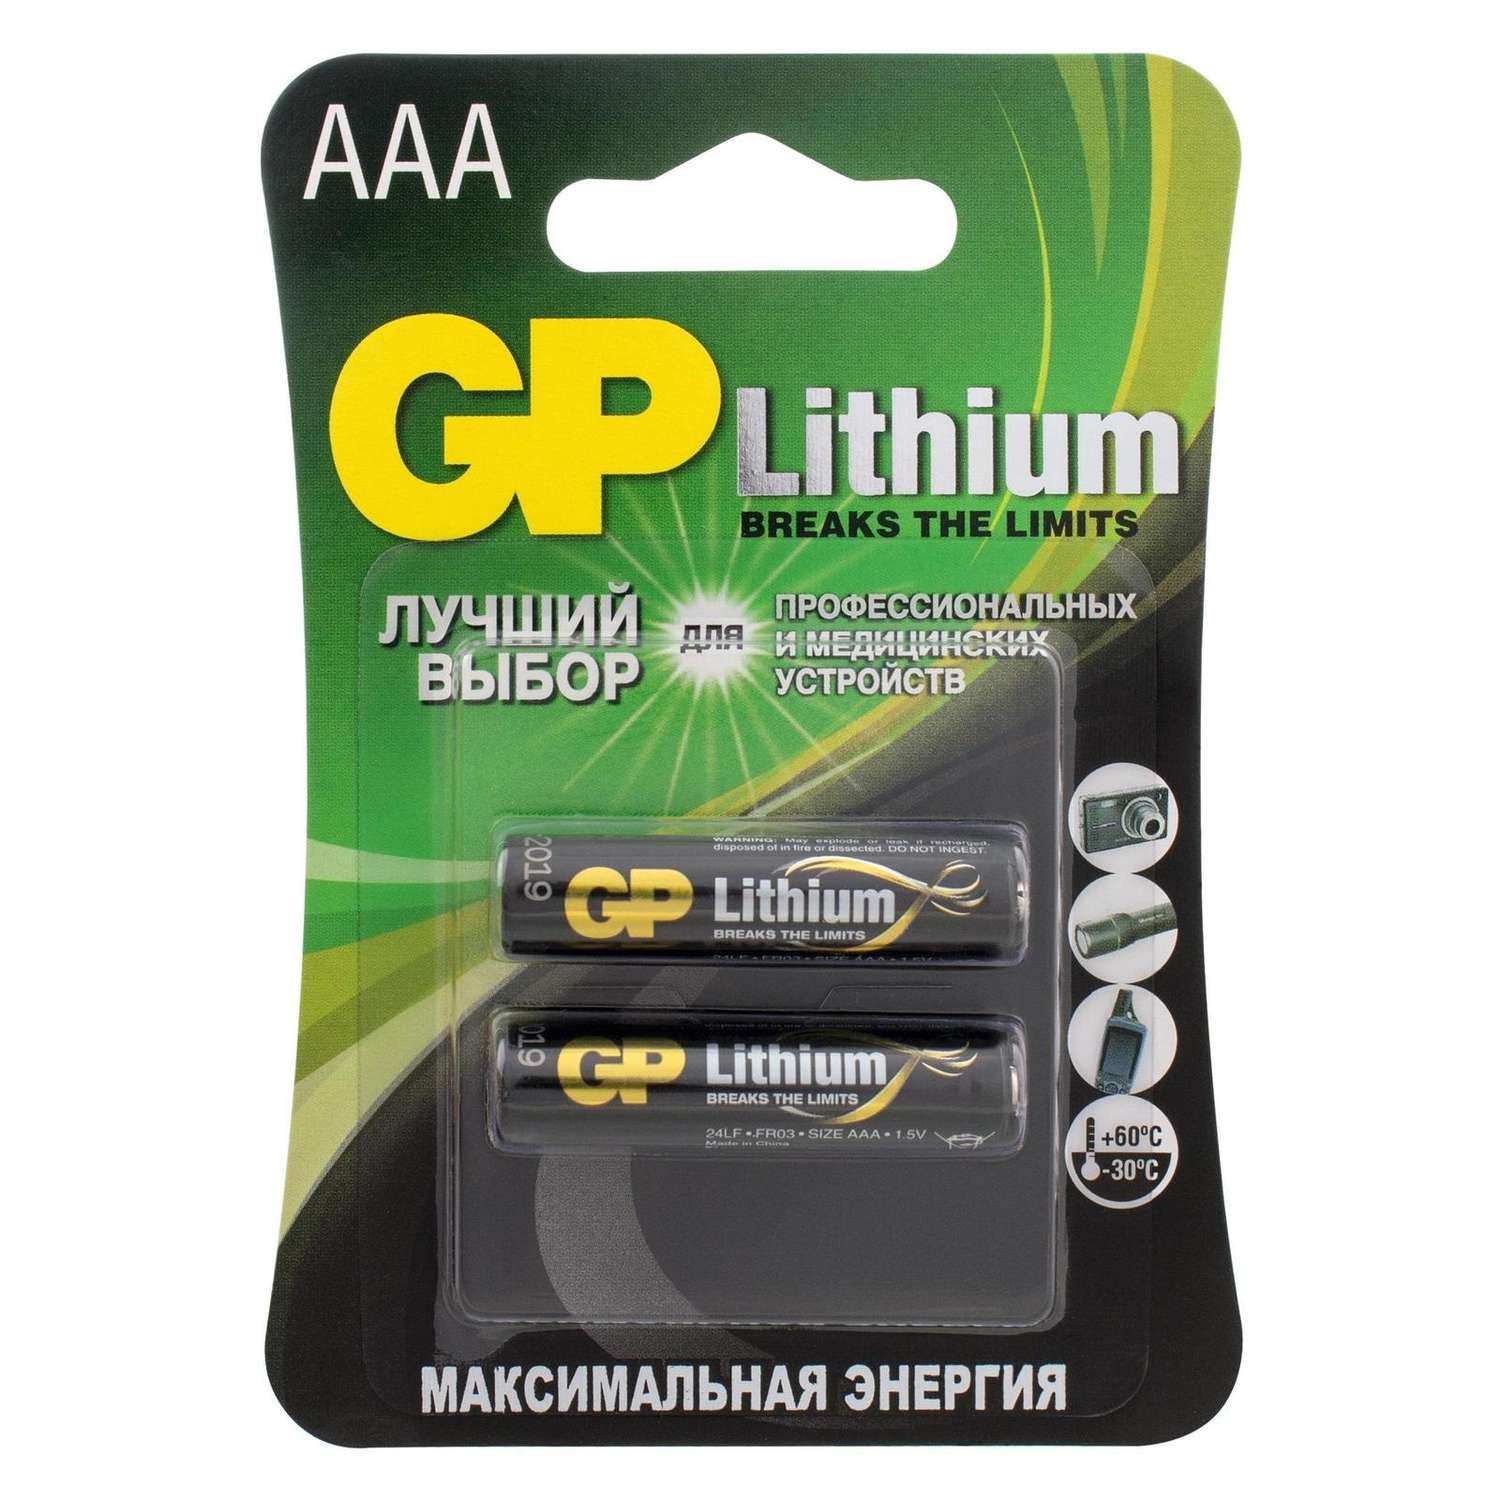 Набор литиевых батареек АAA GP 24LF 2 штуки в упаковке - фото 1